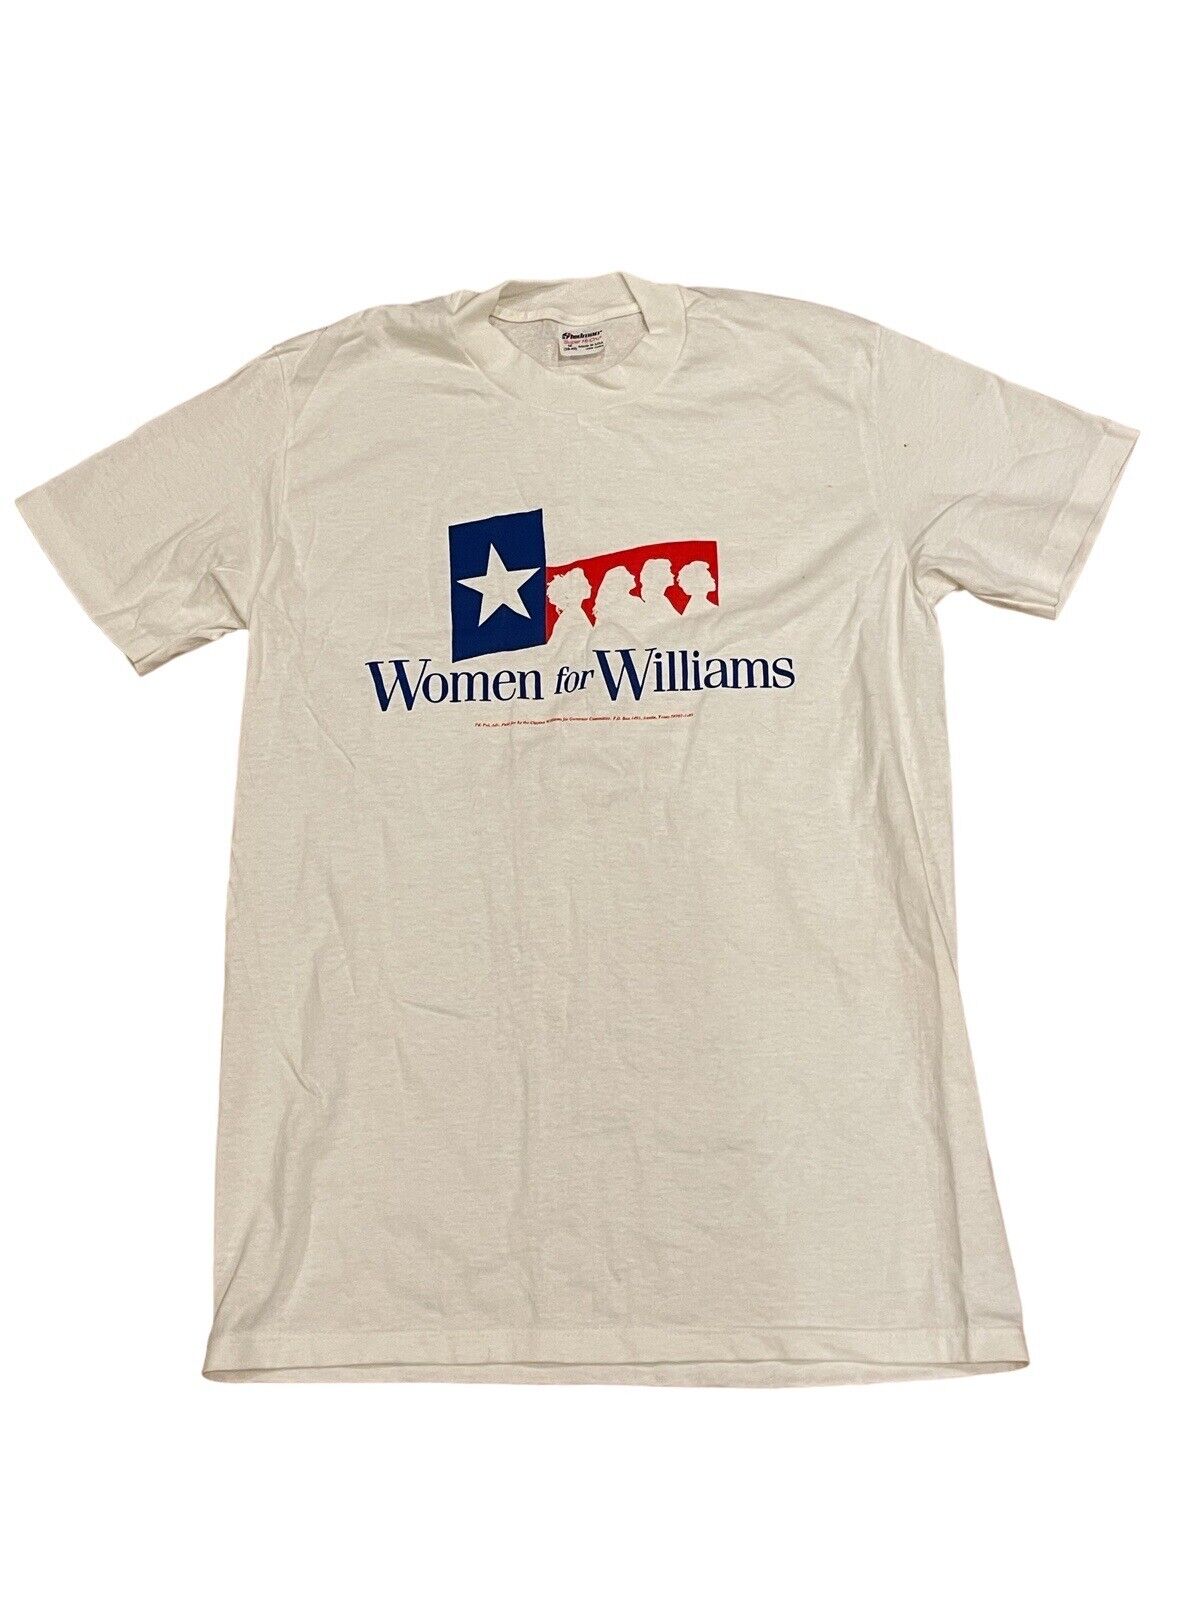 Vintage Texas Governor Election T-shirt Sexist Clayton Williams Governor Medium.